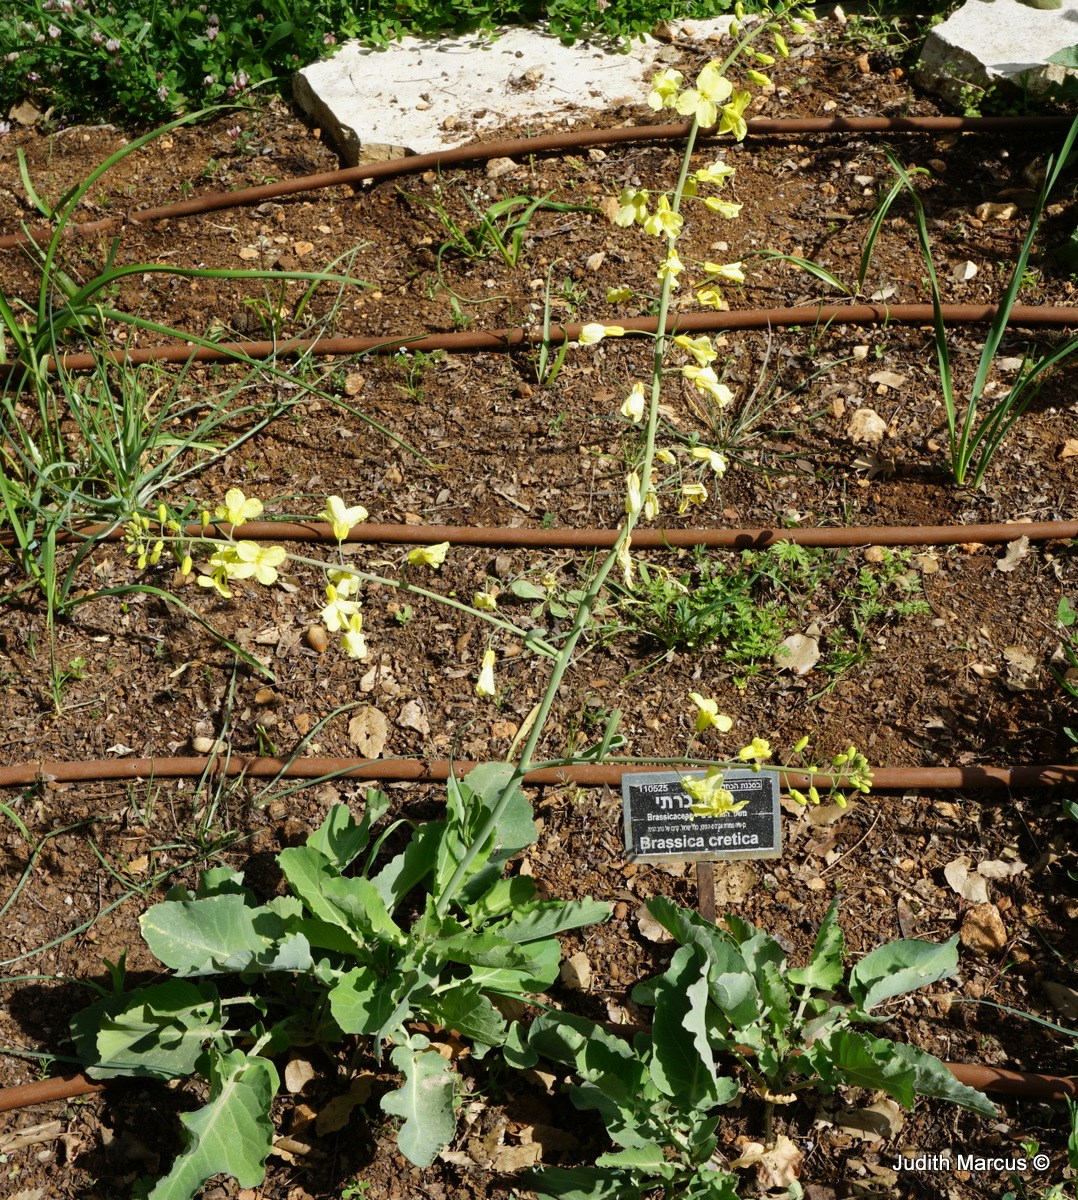 Brassica cretica - Cretan Cabbage, כרוב כרתי, כרוב כרתי